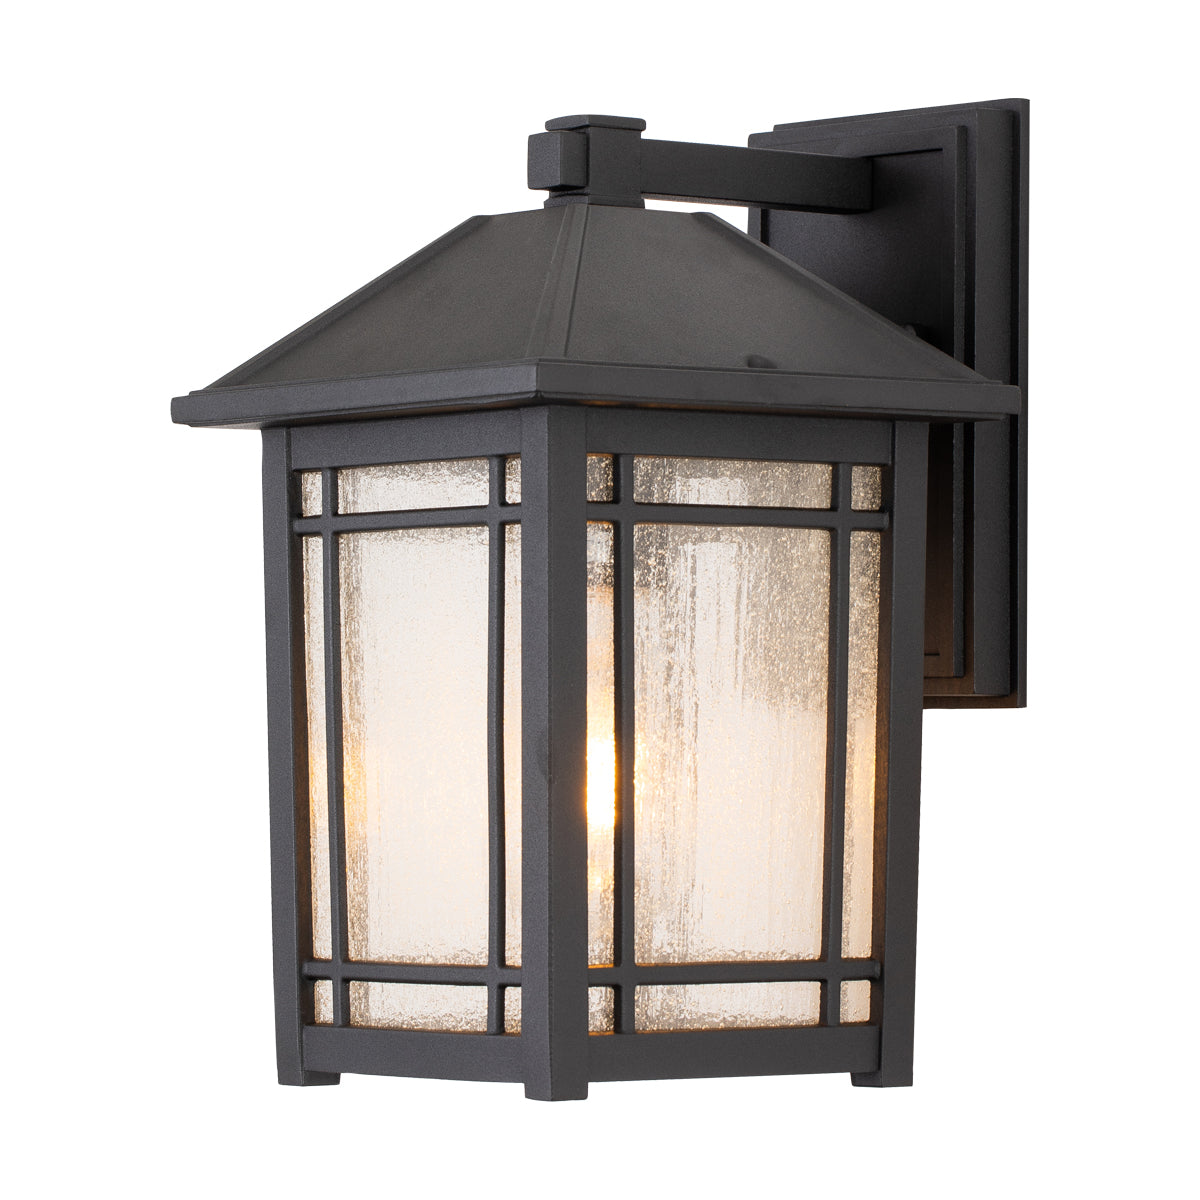 Cedar Medium Wall Lantern - Black Finish